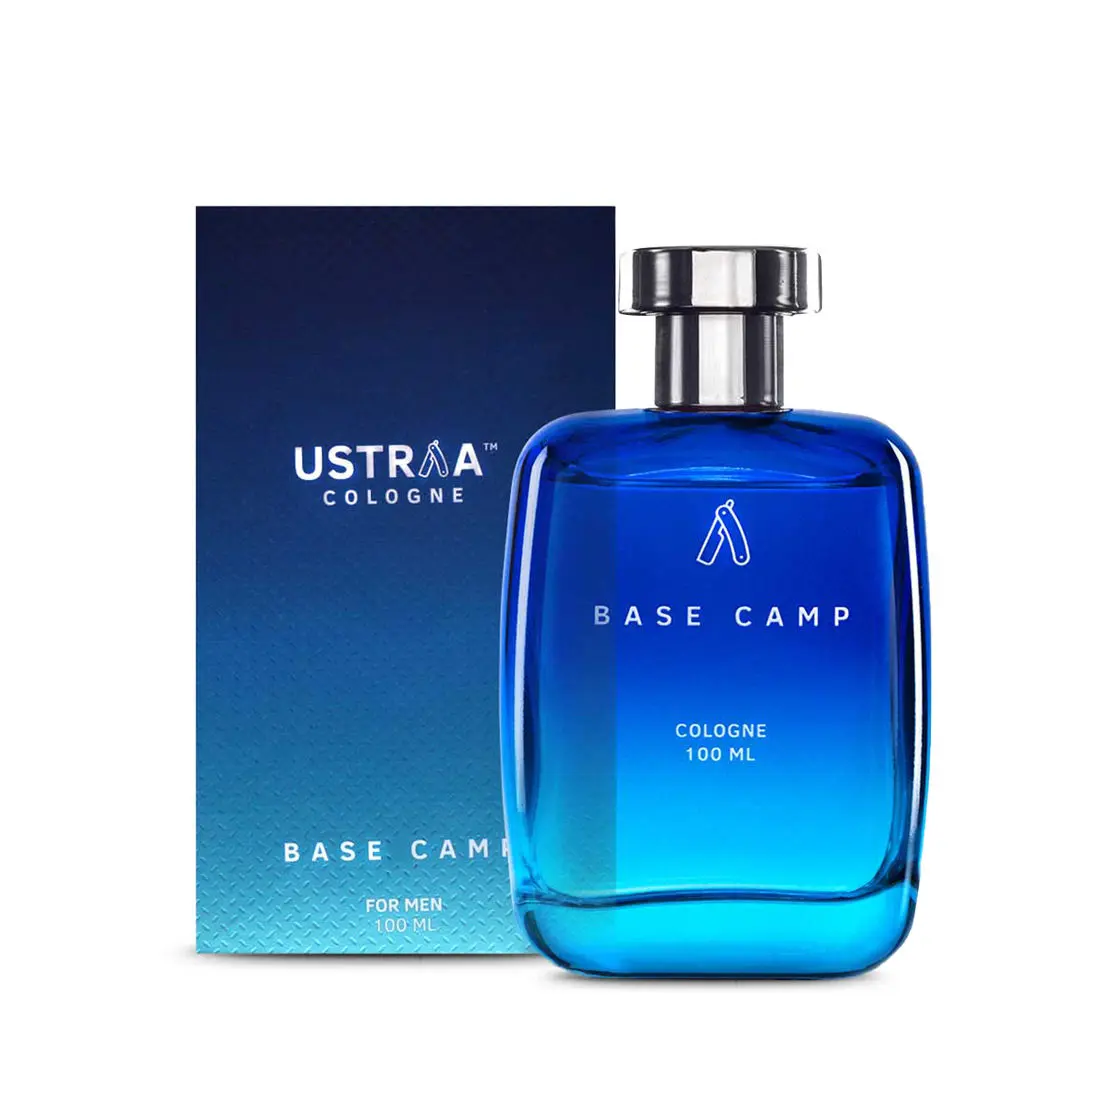 Ustraa Base Camp Cologne - 100 ml - Perfume for Men